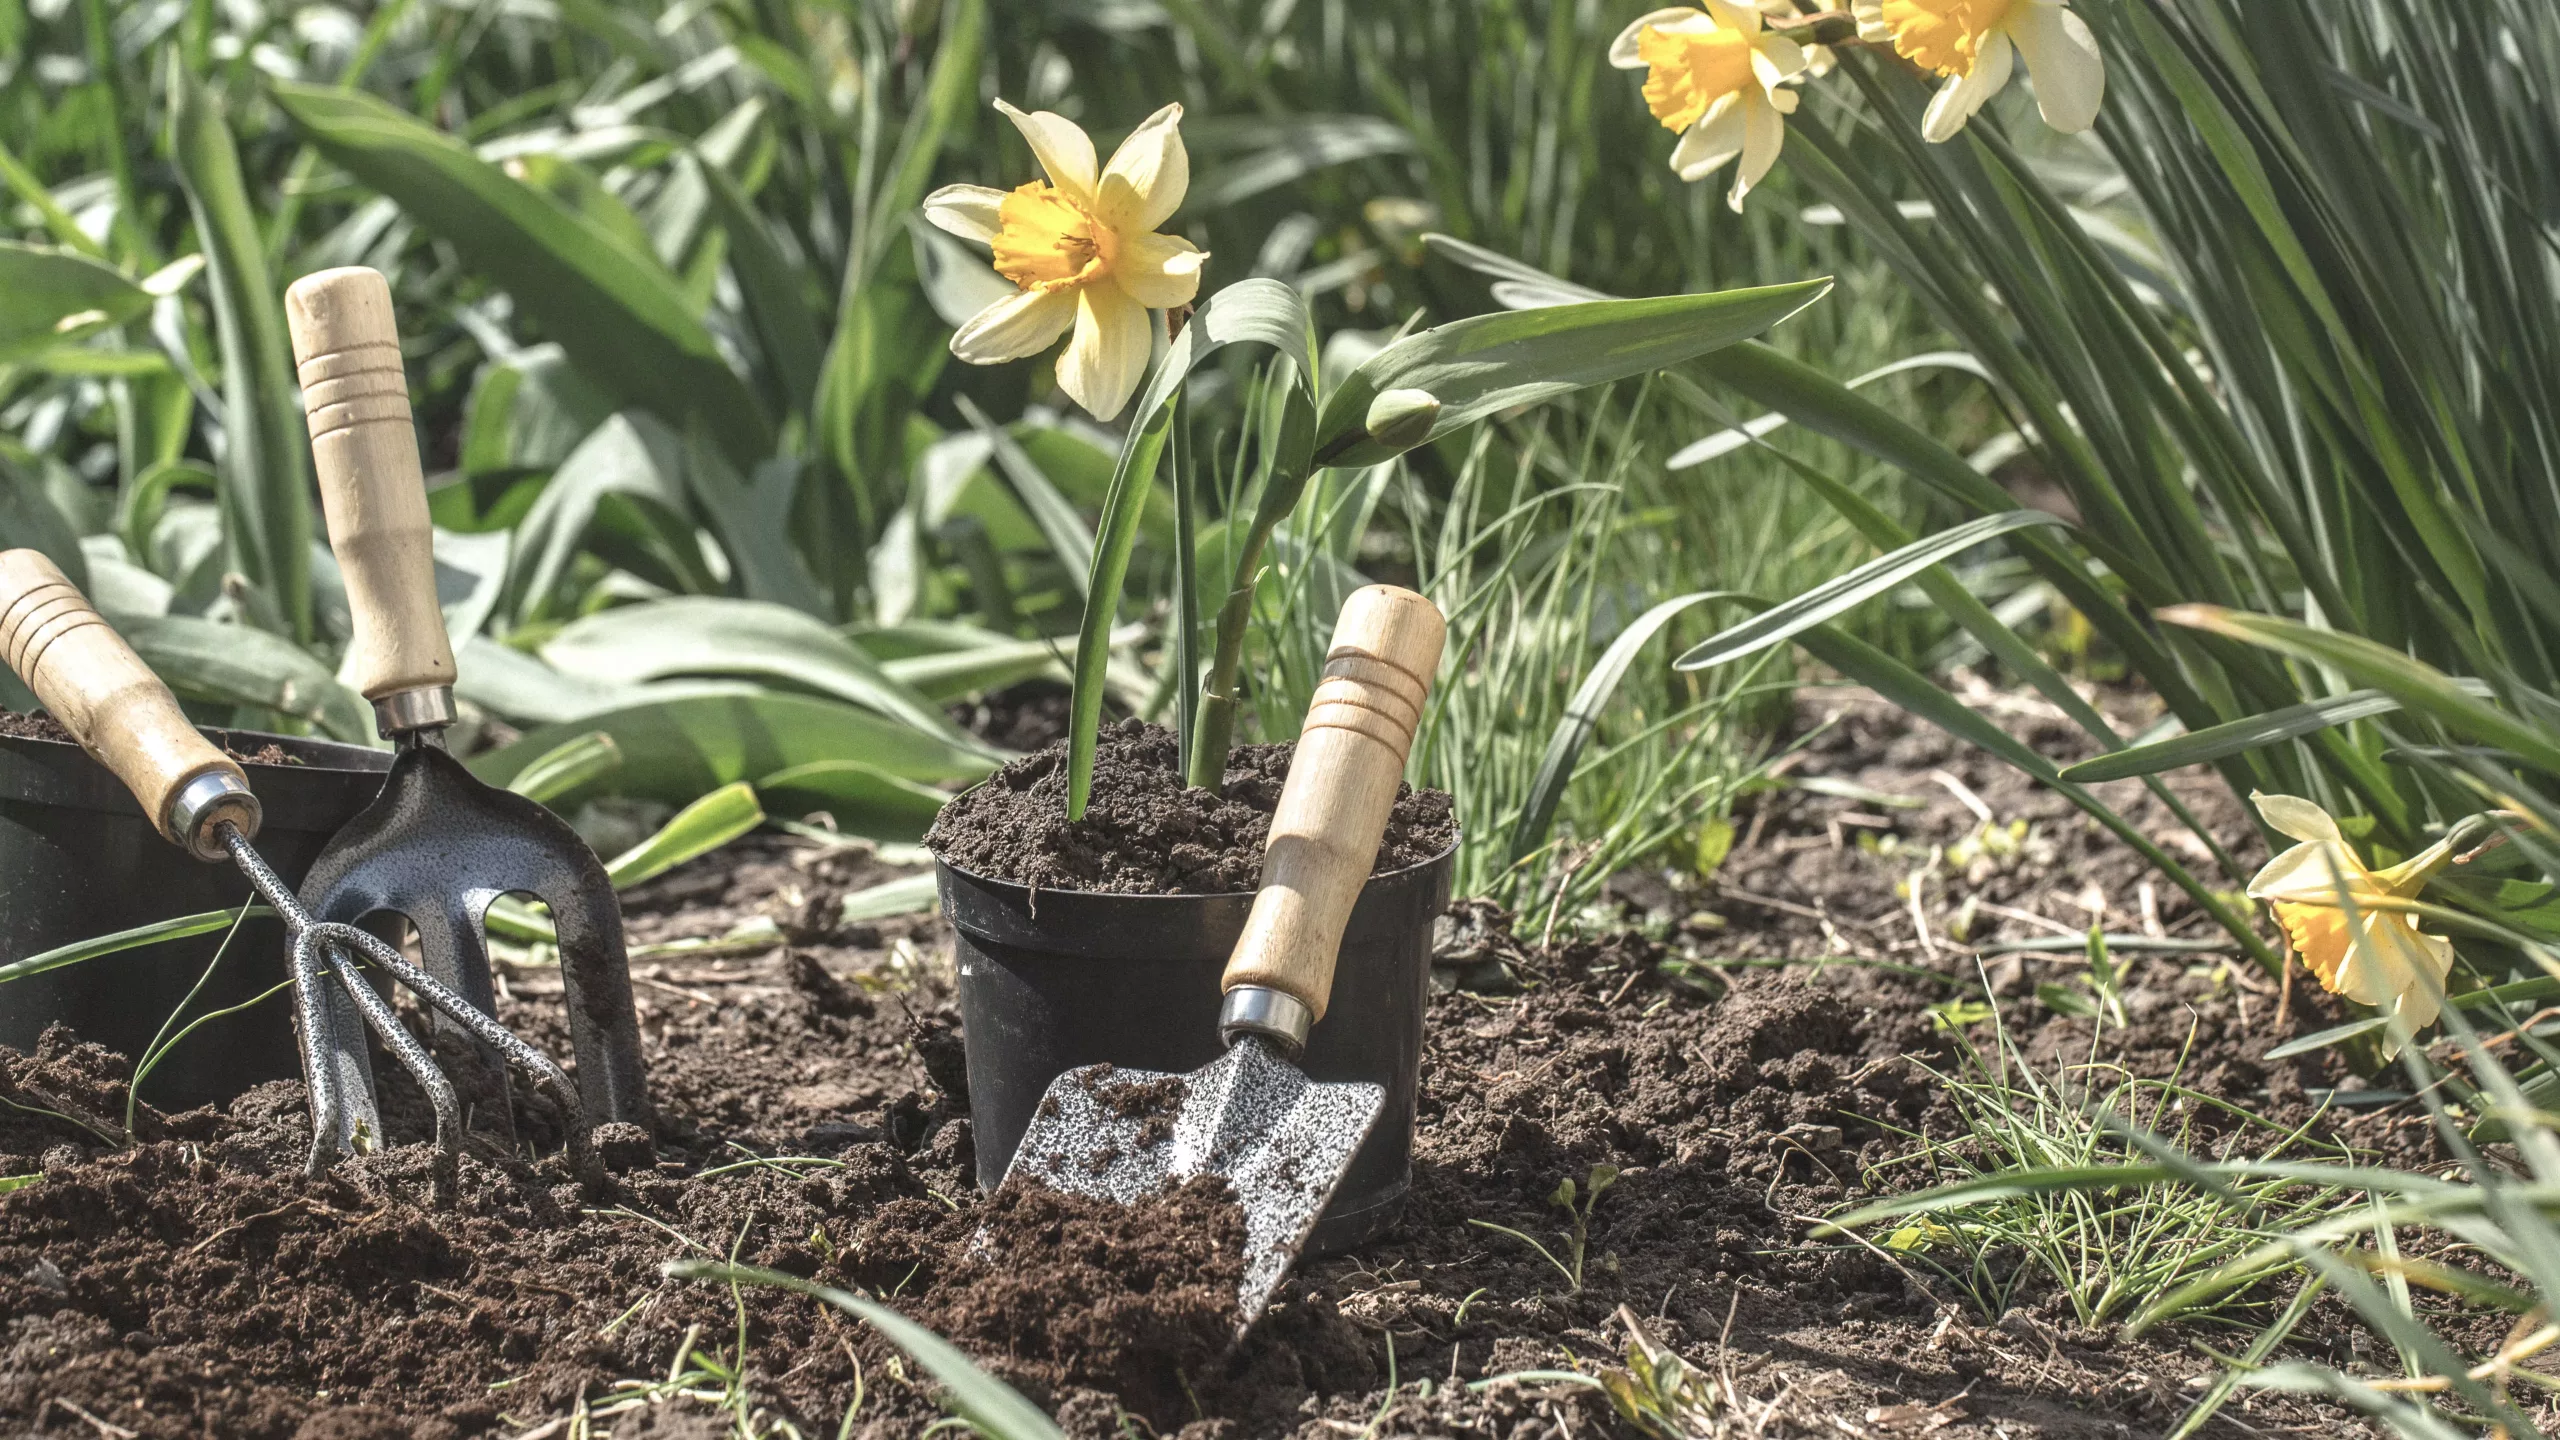 Planting flowers in the garden, garden tools, flowers